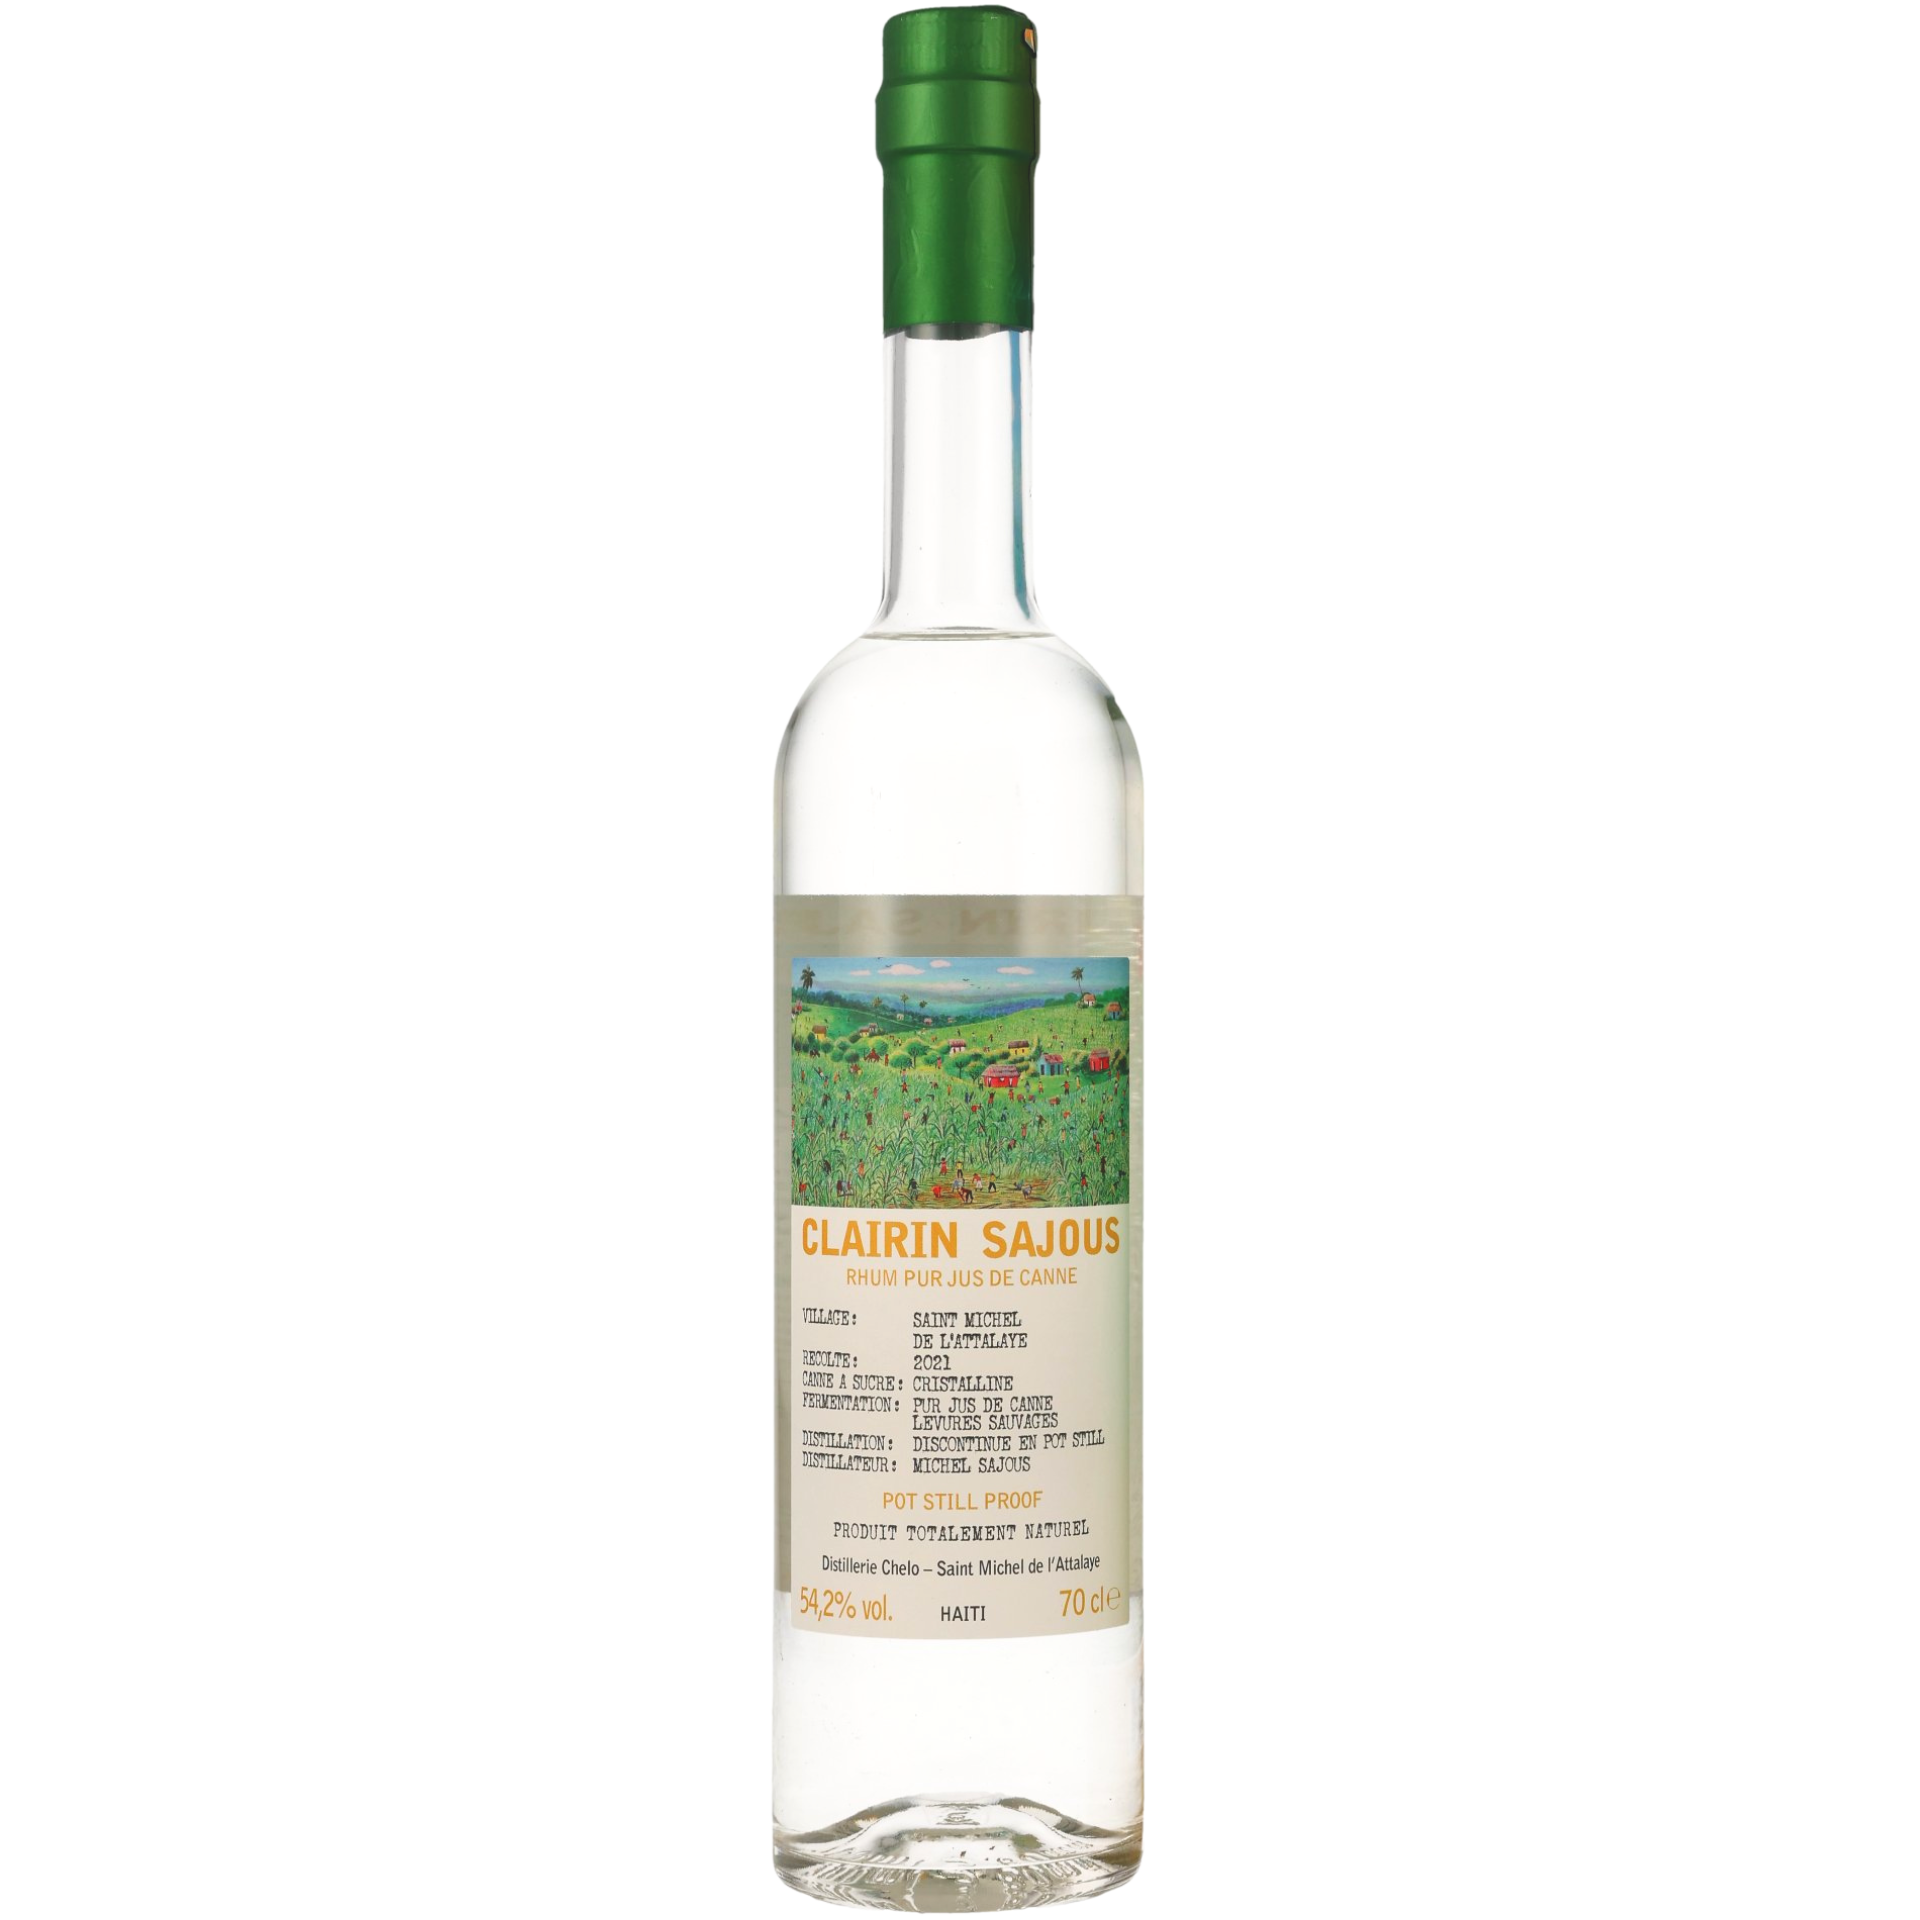 Clairin Sajous Saint Michel L'Attalaye Haiti Rum 54,2% 0,7l